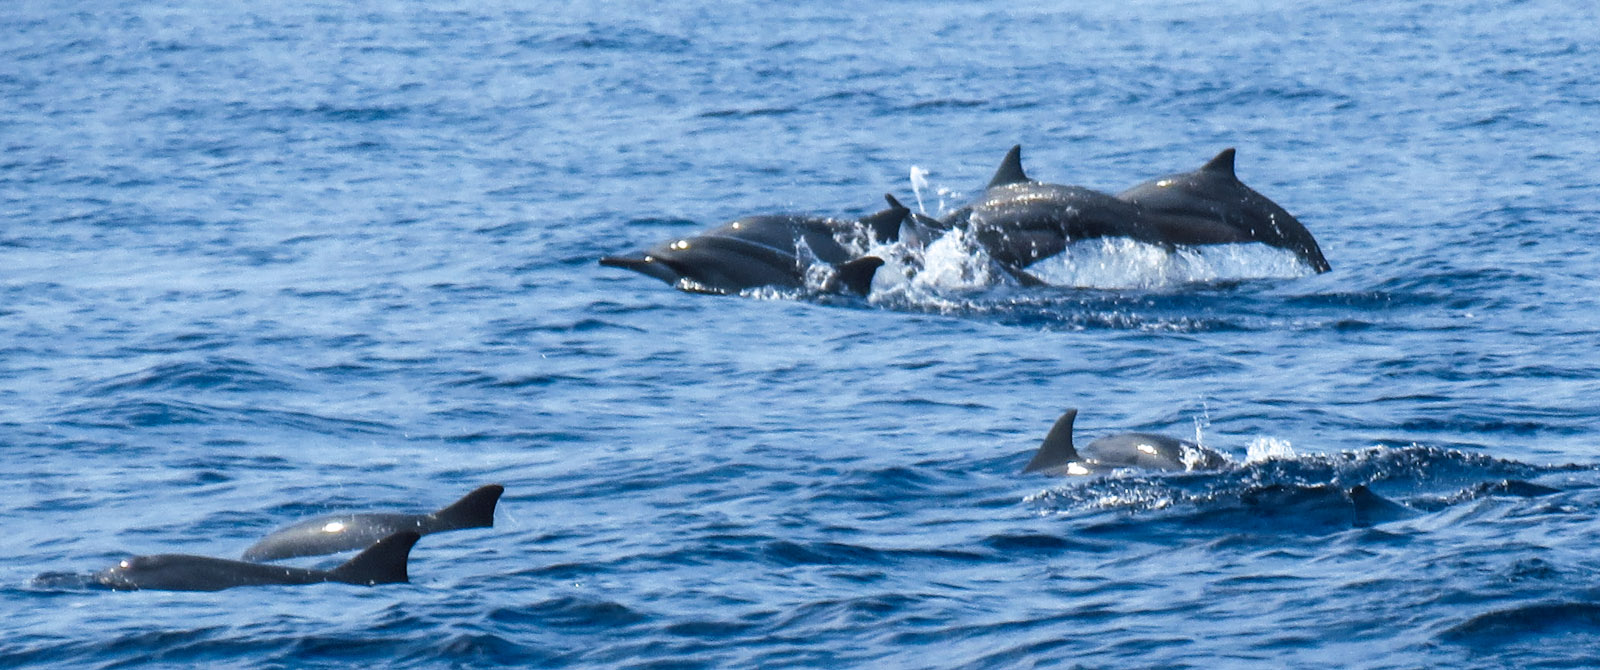 dolphin spotting in goa